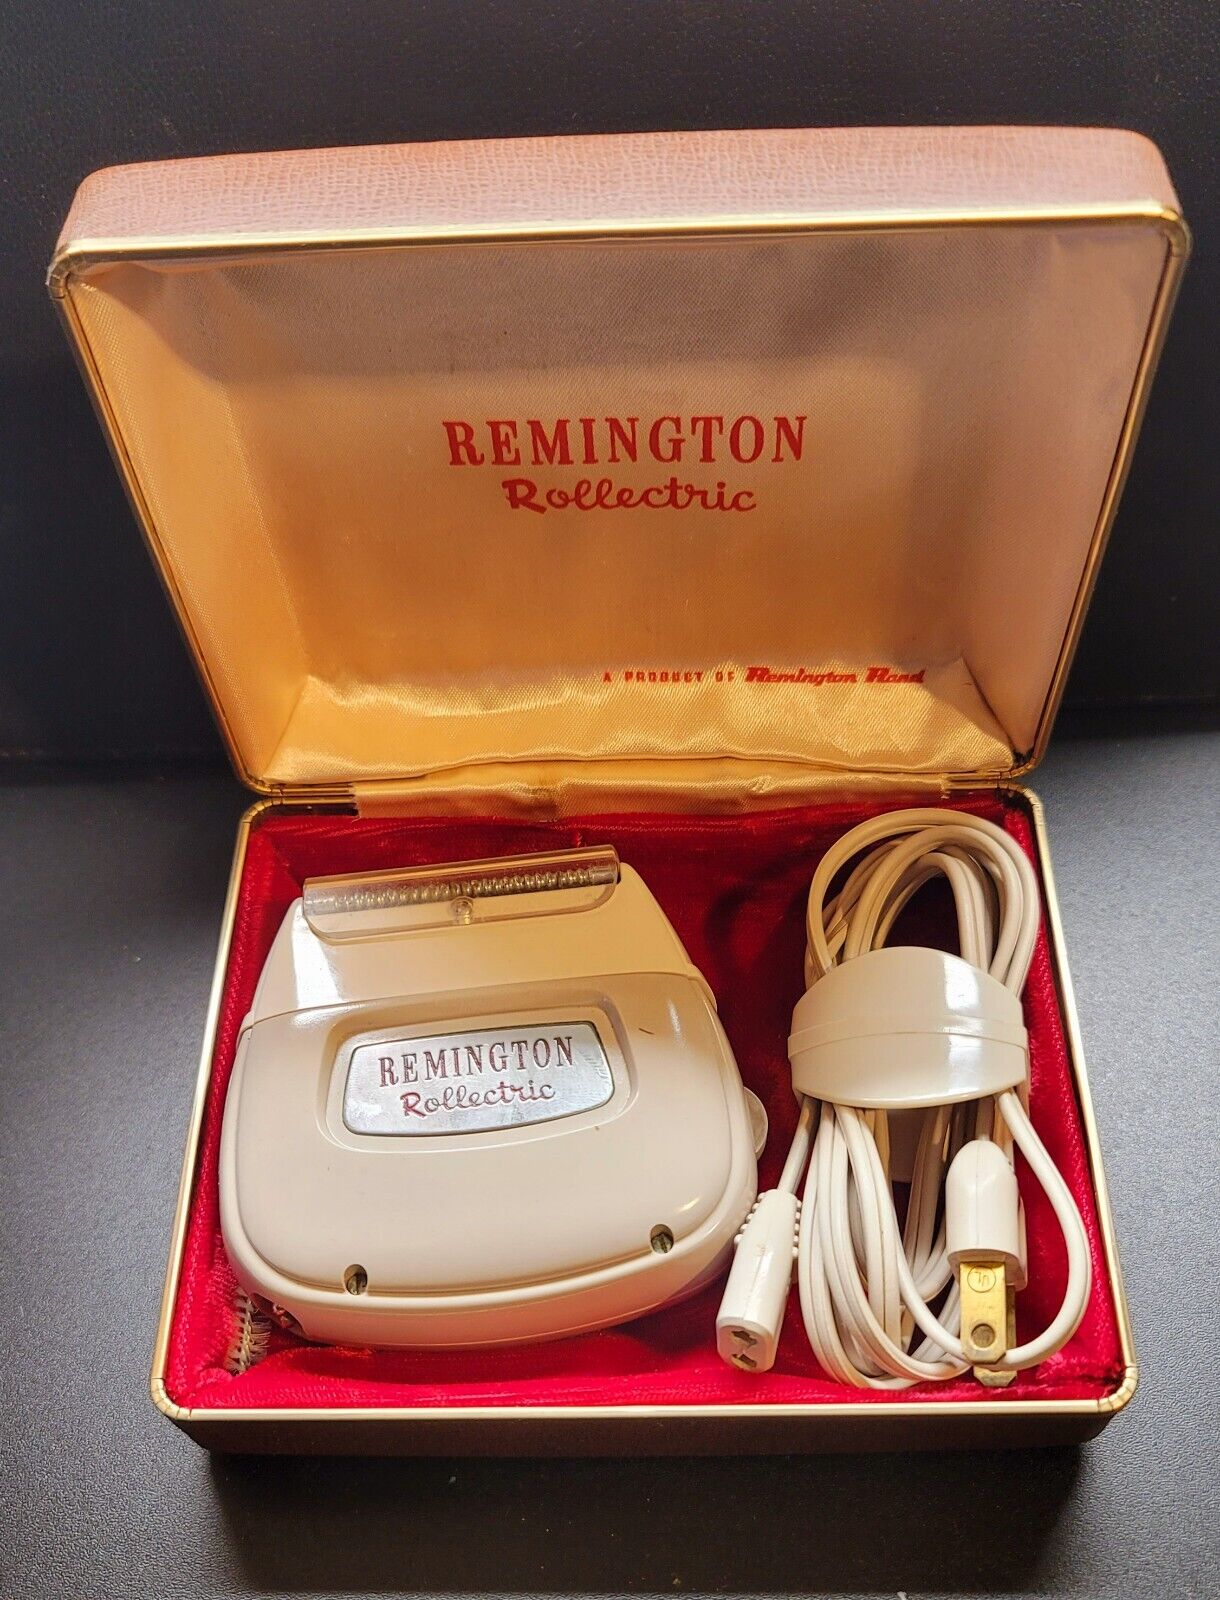 Vintage 1950s Remington Rollectric Electric Shaver Original Hard Case - Works